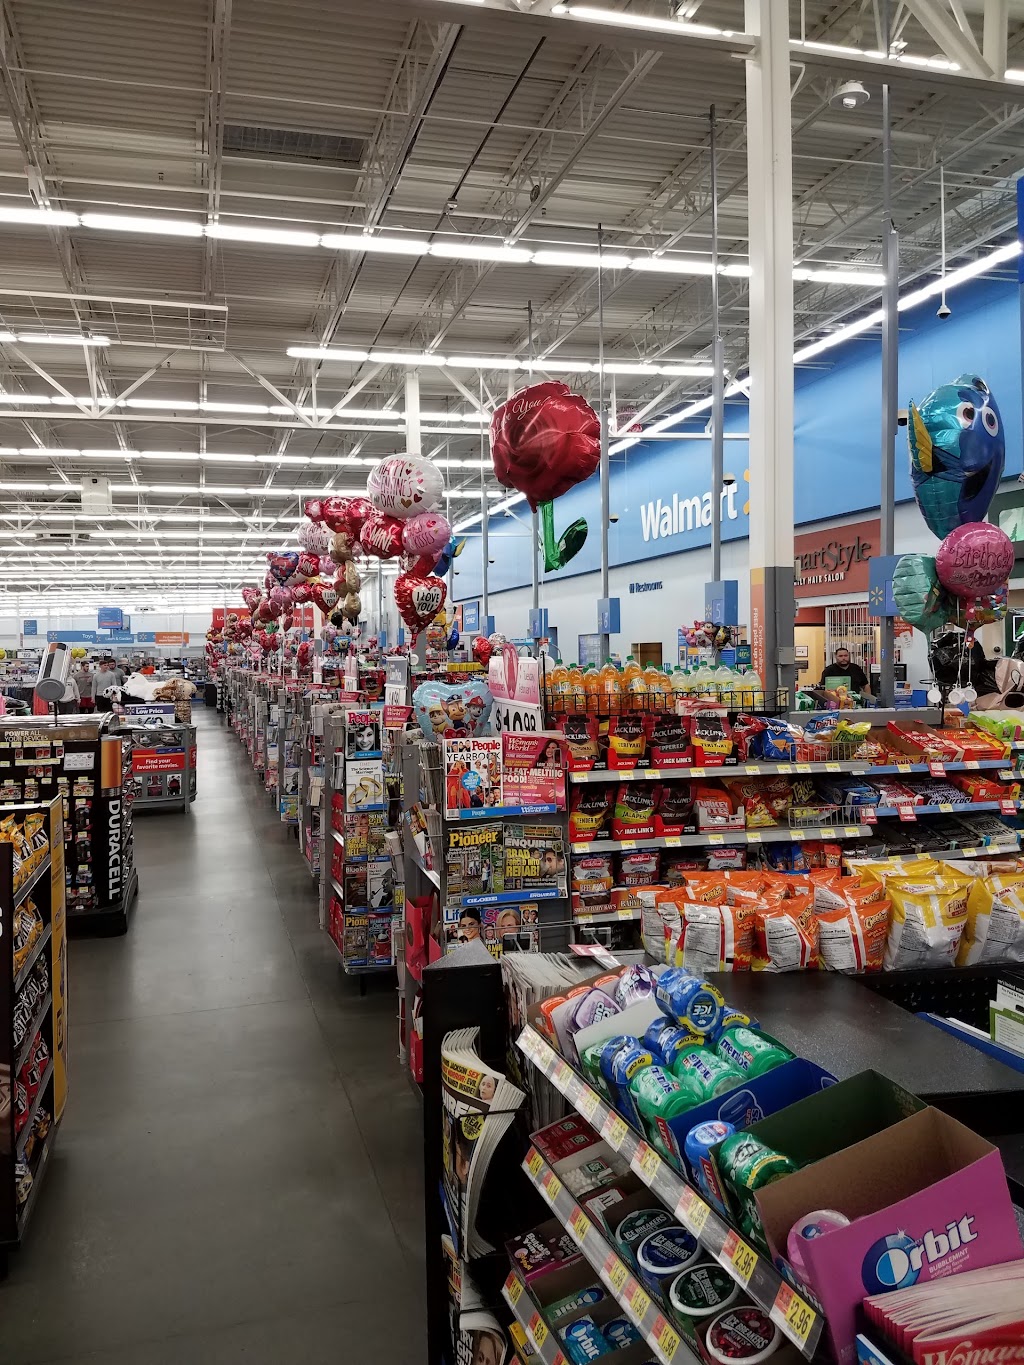 Walmart Supercenter | Photo 5 of 10 | Address: 705 Retail Way, Louisburg, NC 27549, USA | Phone: (919) 496-2221